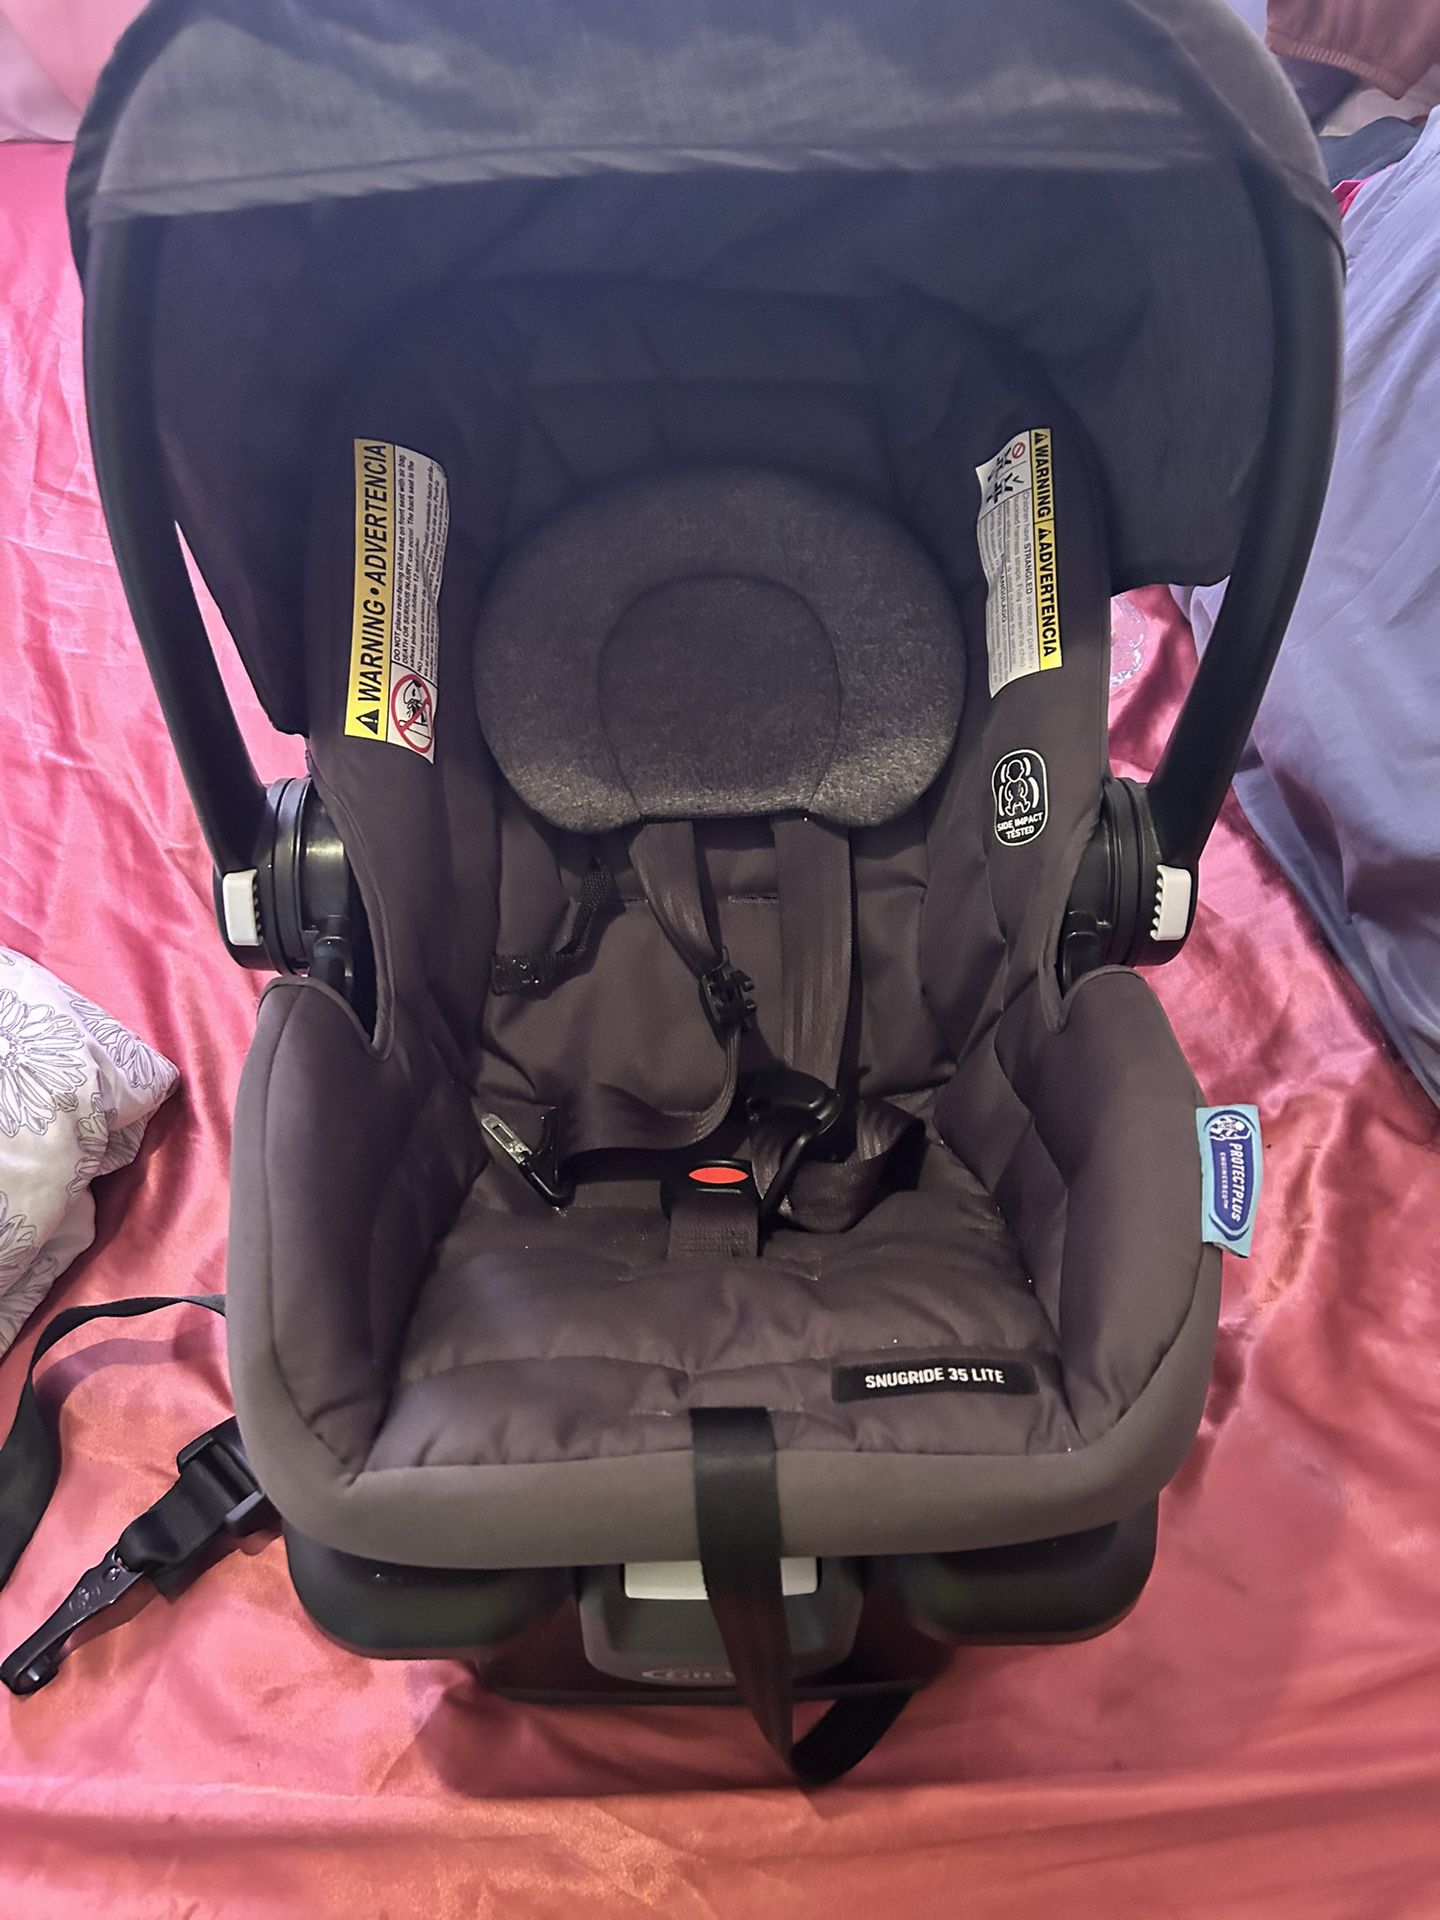 Graco infant car Seat